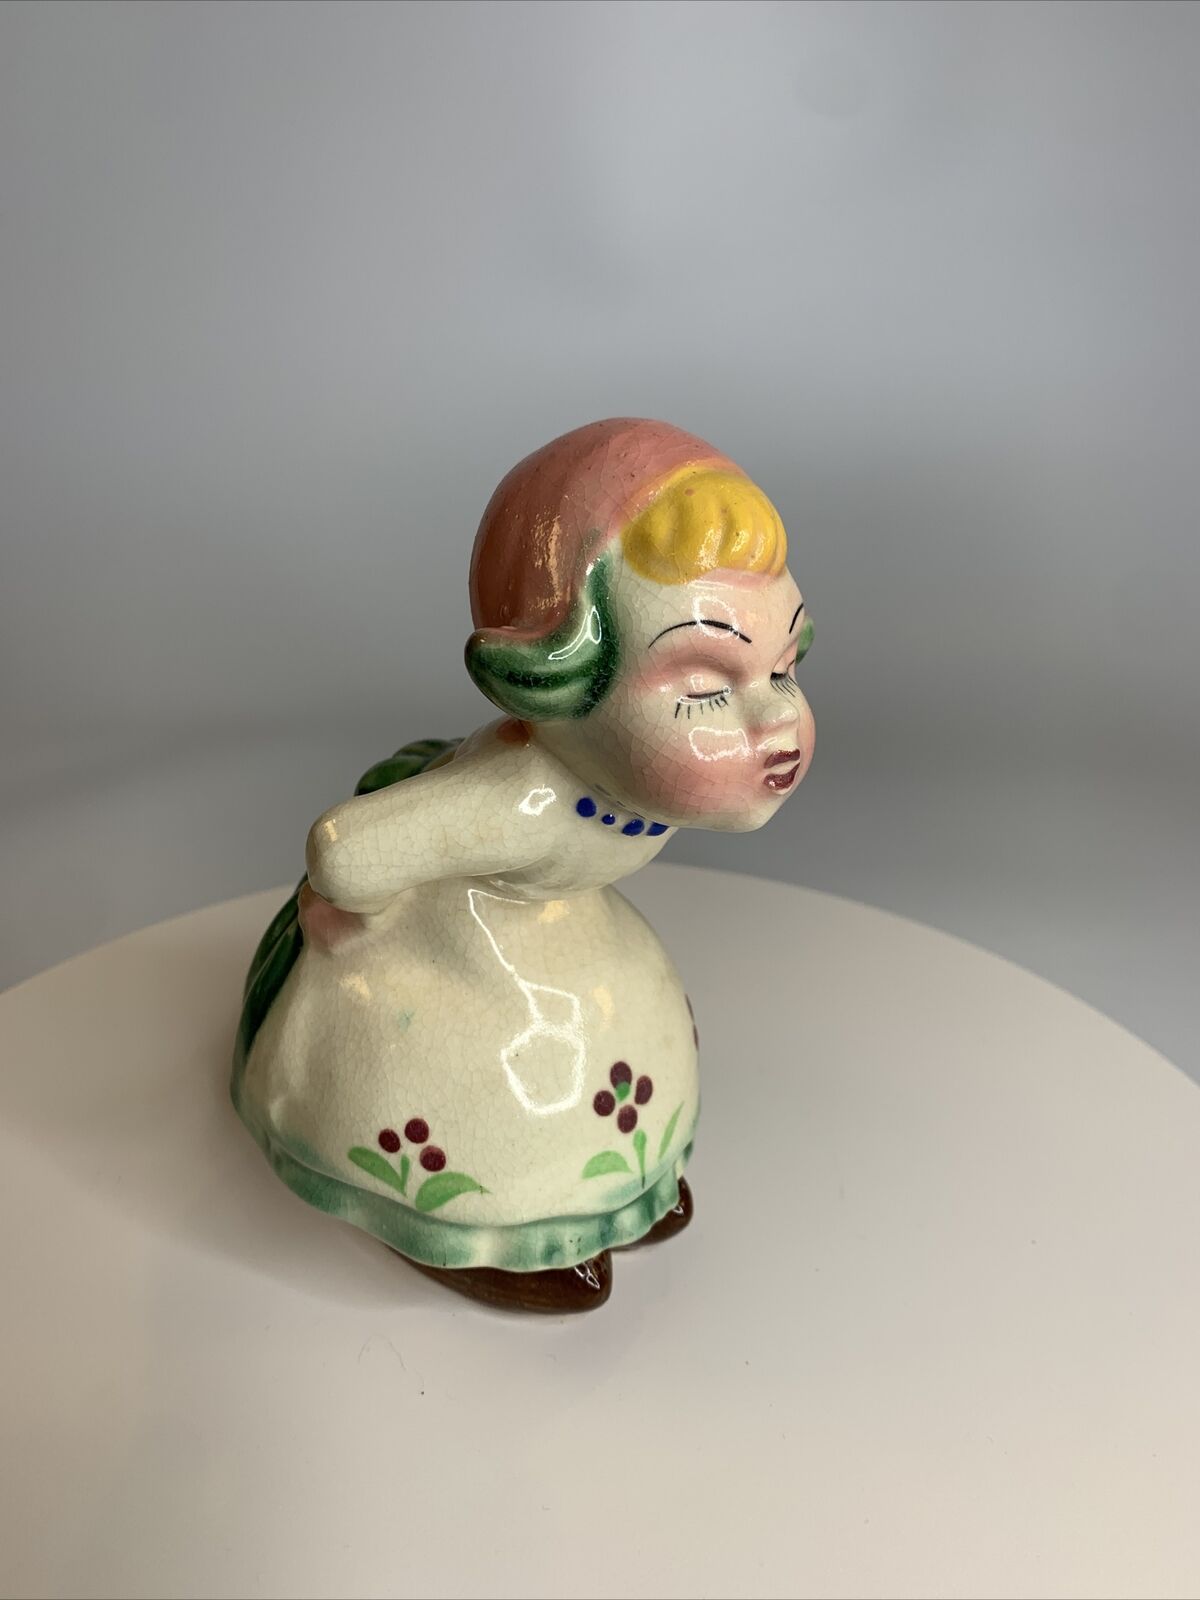 Vintage Japan Ceramic Kissing Dutch Girl Figurine With Green Dress Pink Bonnet